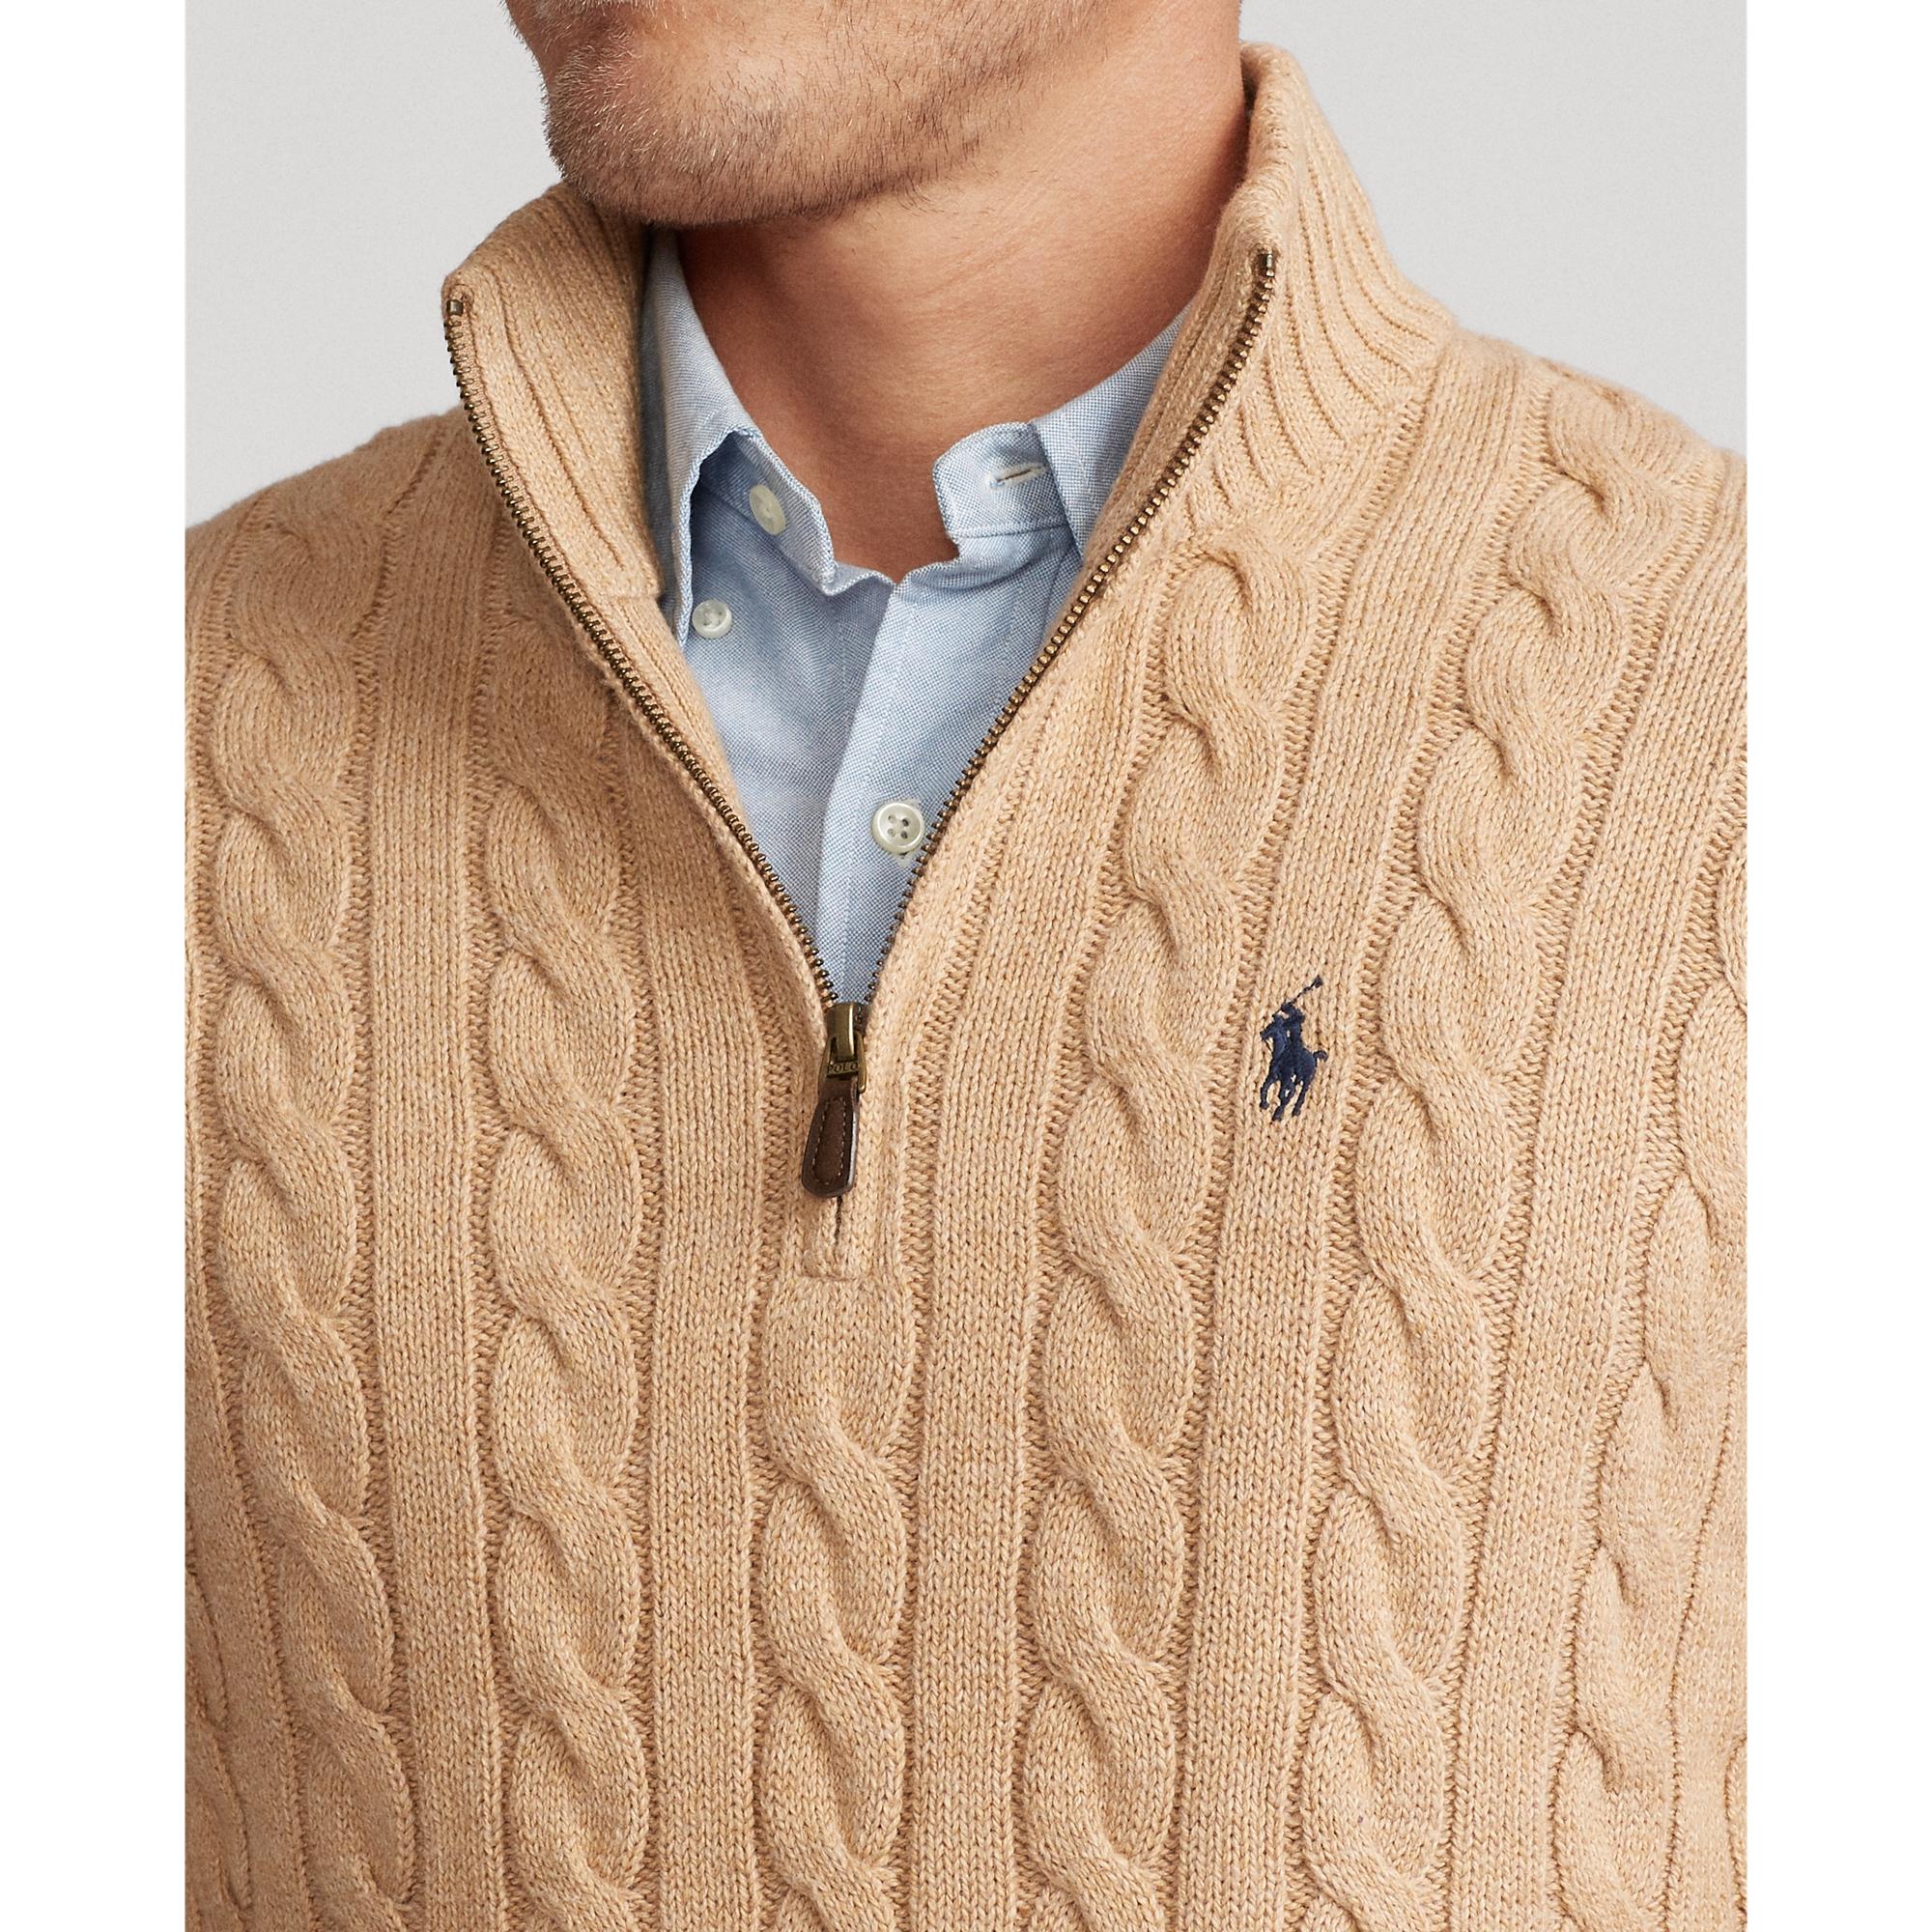 Ralph Lauren Cable-knit Cotton Quarter-zip Sweater in Camel Melange (Natural) for Men - Lyst